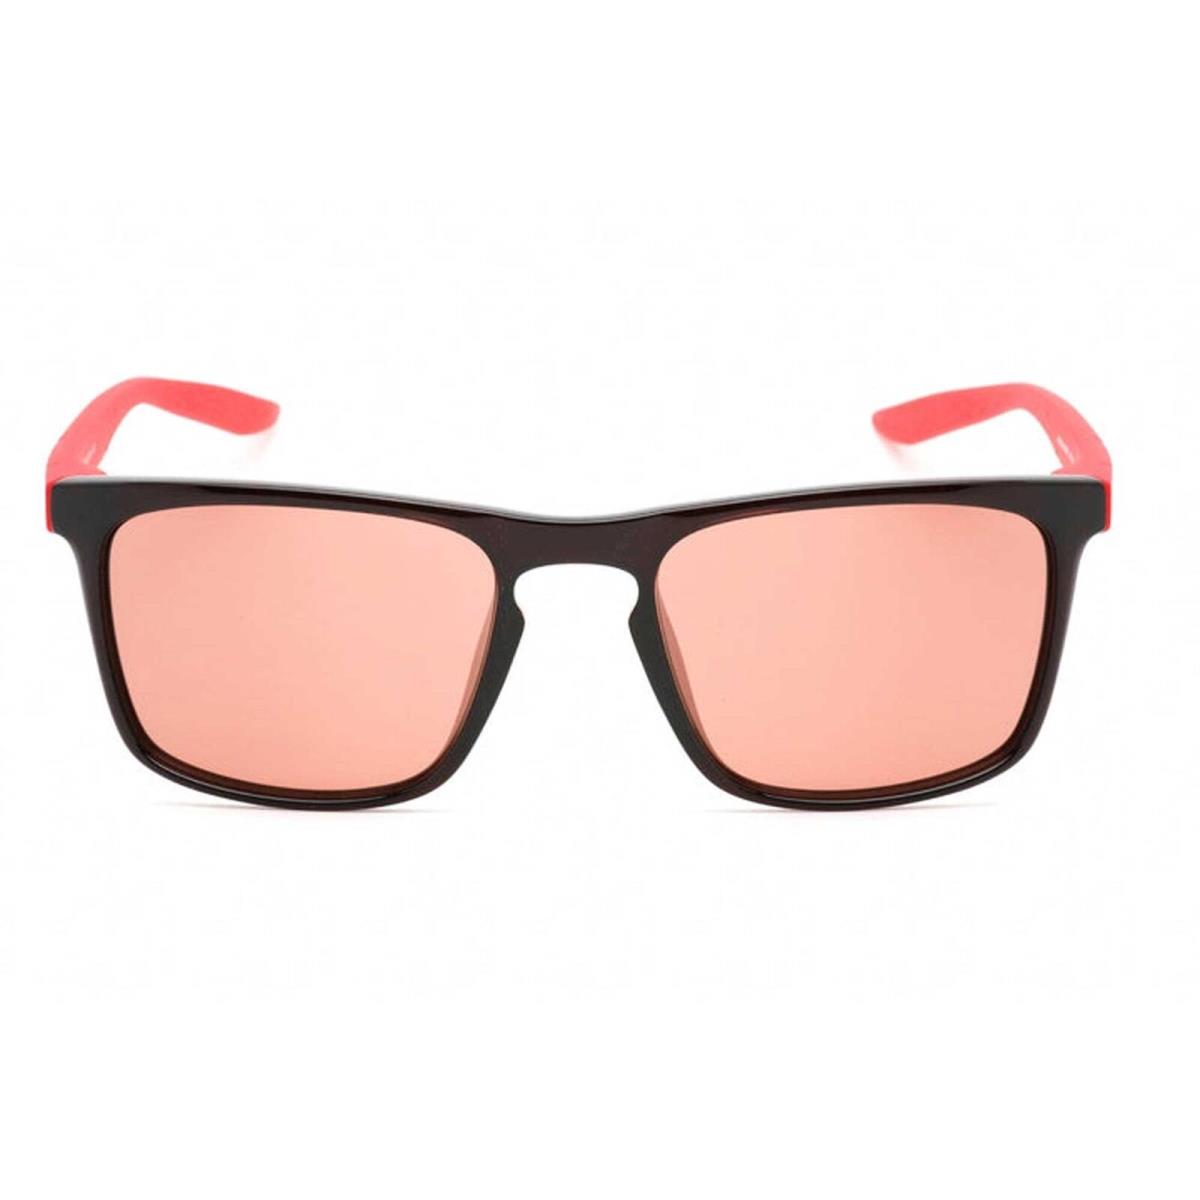 Nike Men`s Sunglasses Copper Lens Brown Basalt Plastic Frame Sky Ascent 228